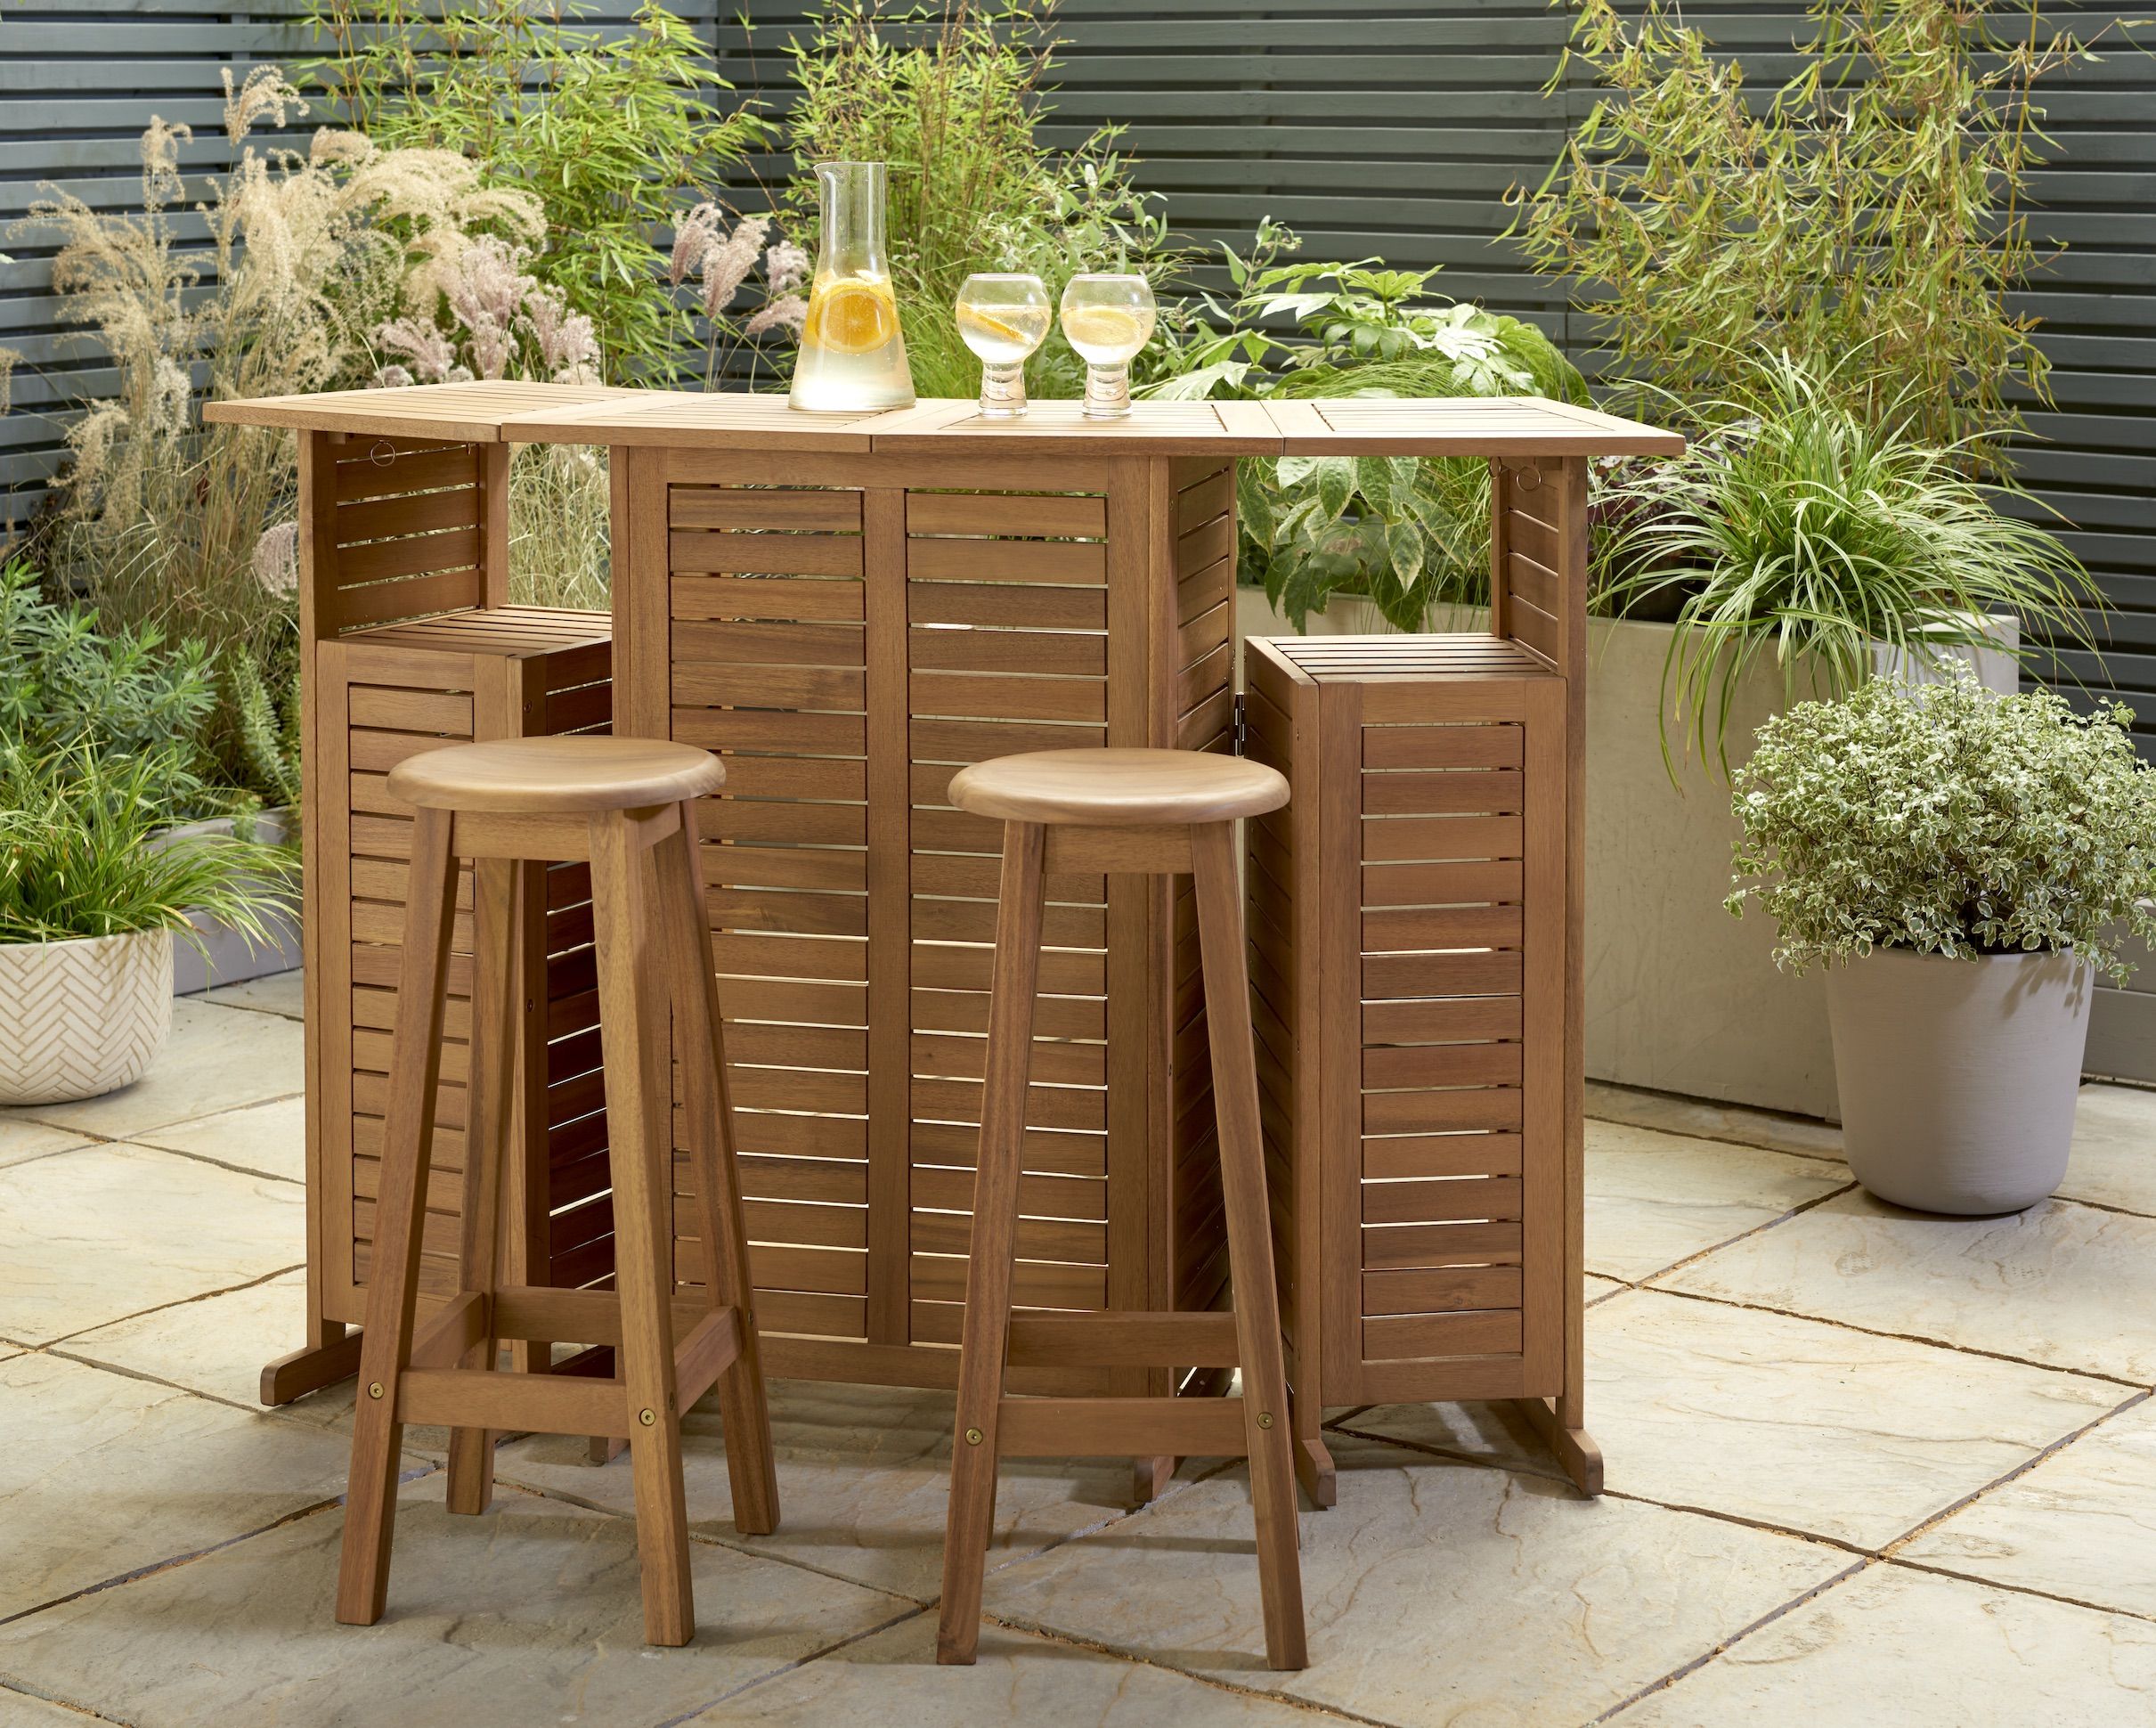 Foldable Garden Bar Argos, White Plastic Table And Chairs Garden Argos